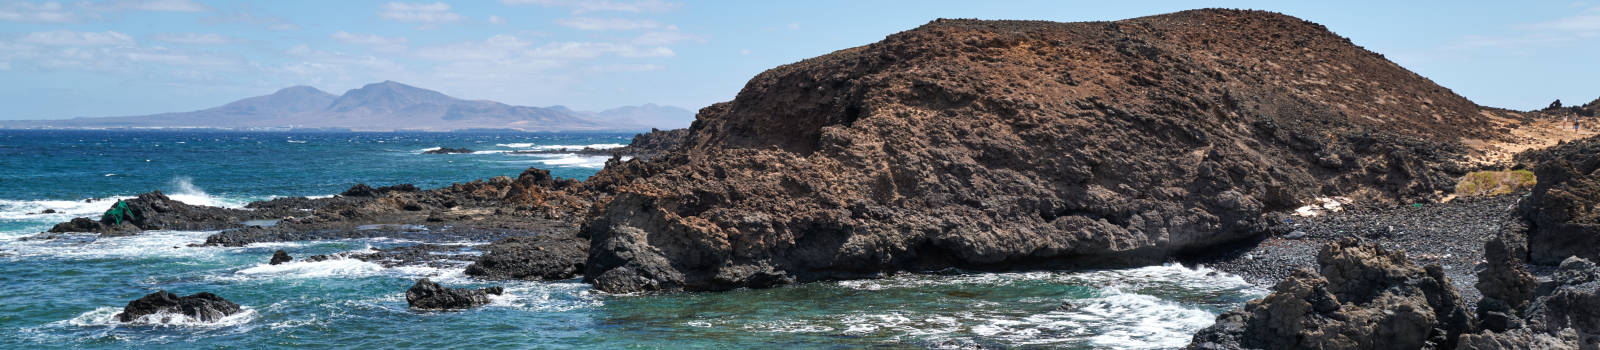 Die Strände Fuerteventuras: Caleta del Vino